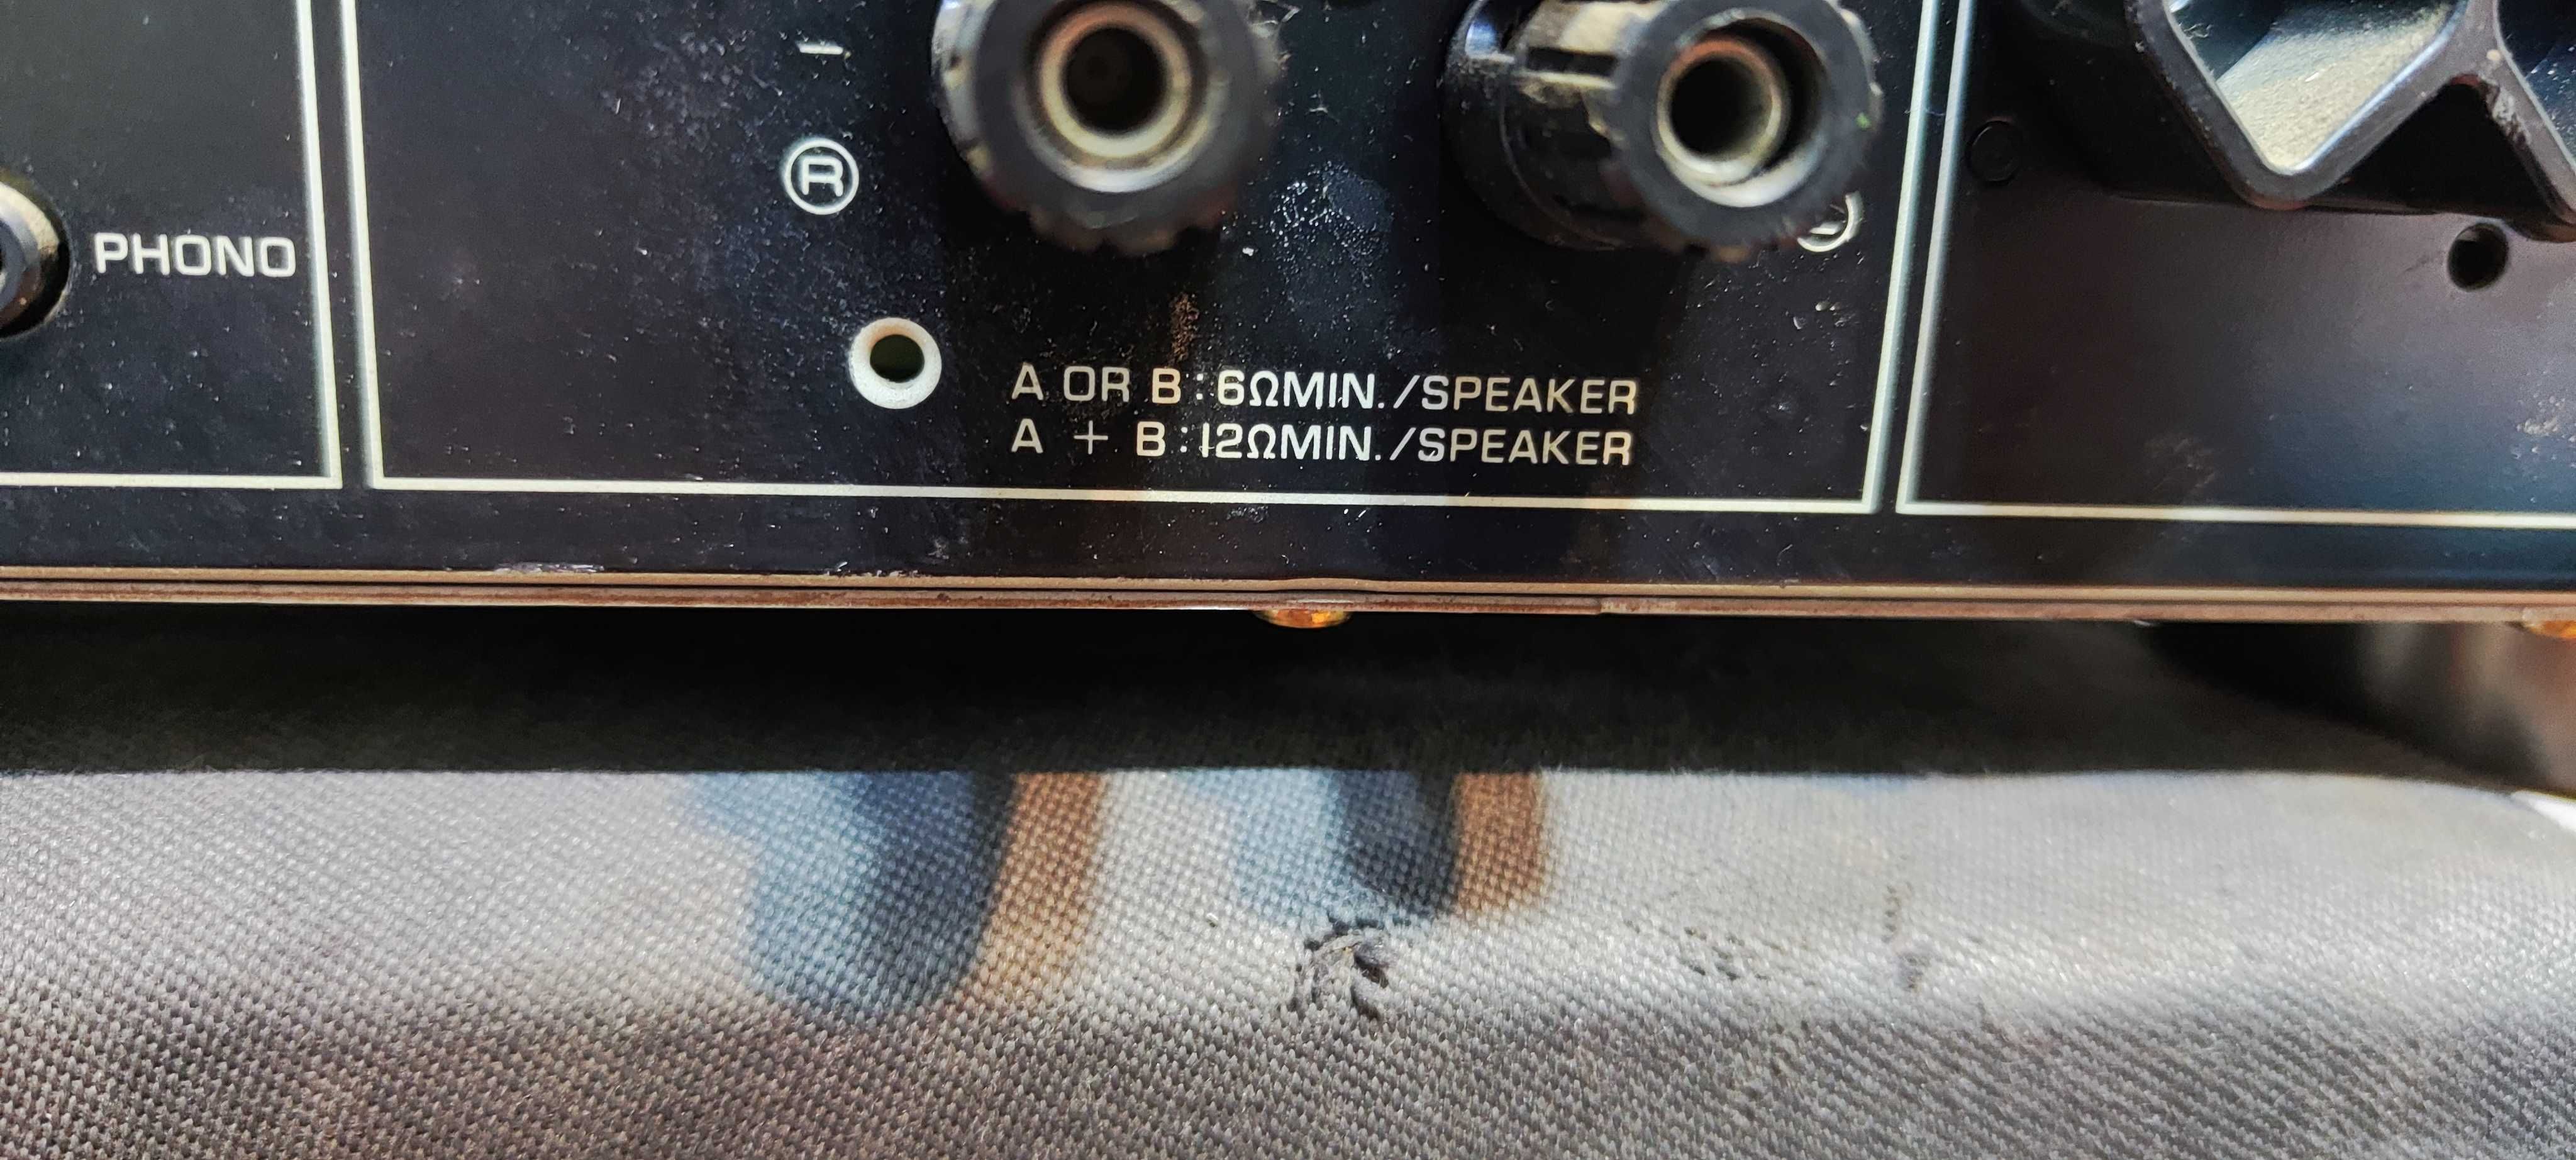 Amplificator Audio Yamaha AX-V401 Statie Audio Amplituner